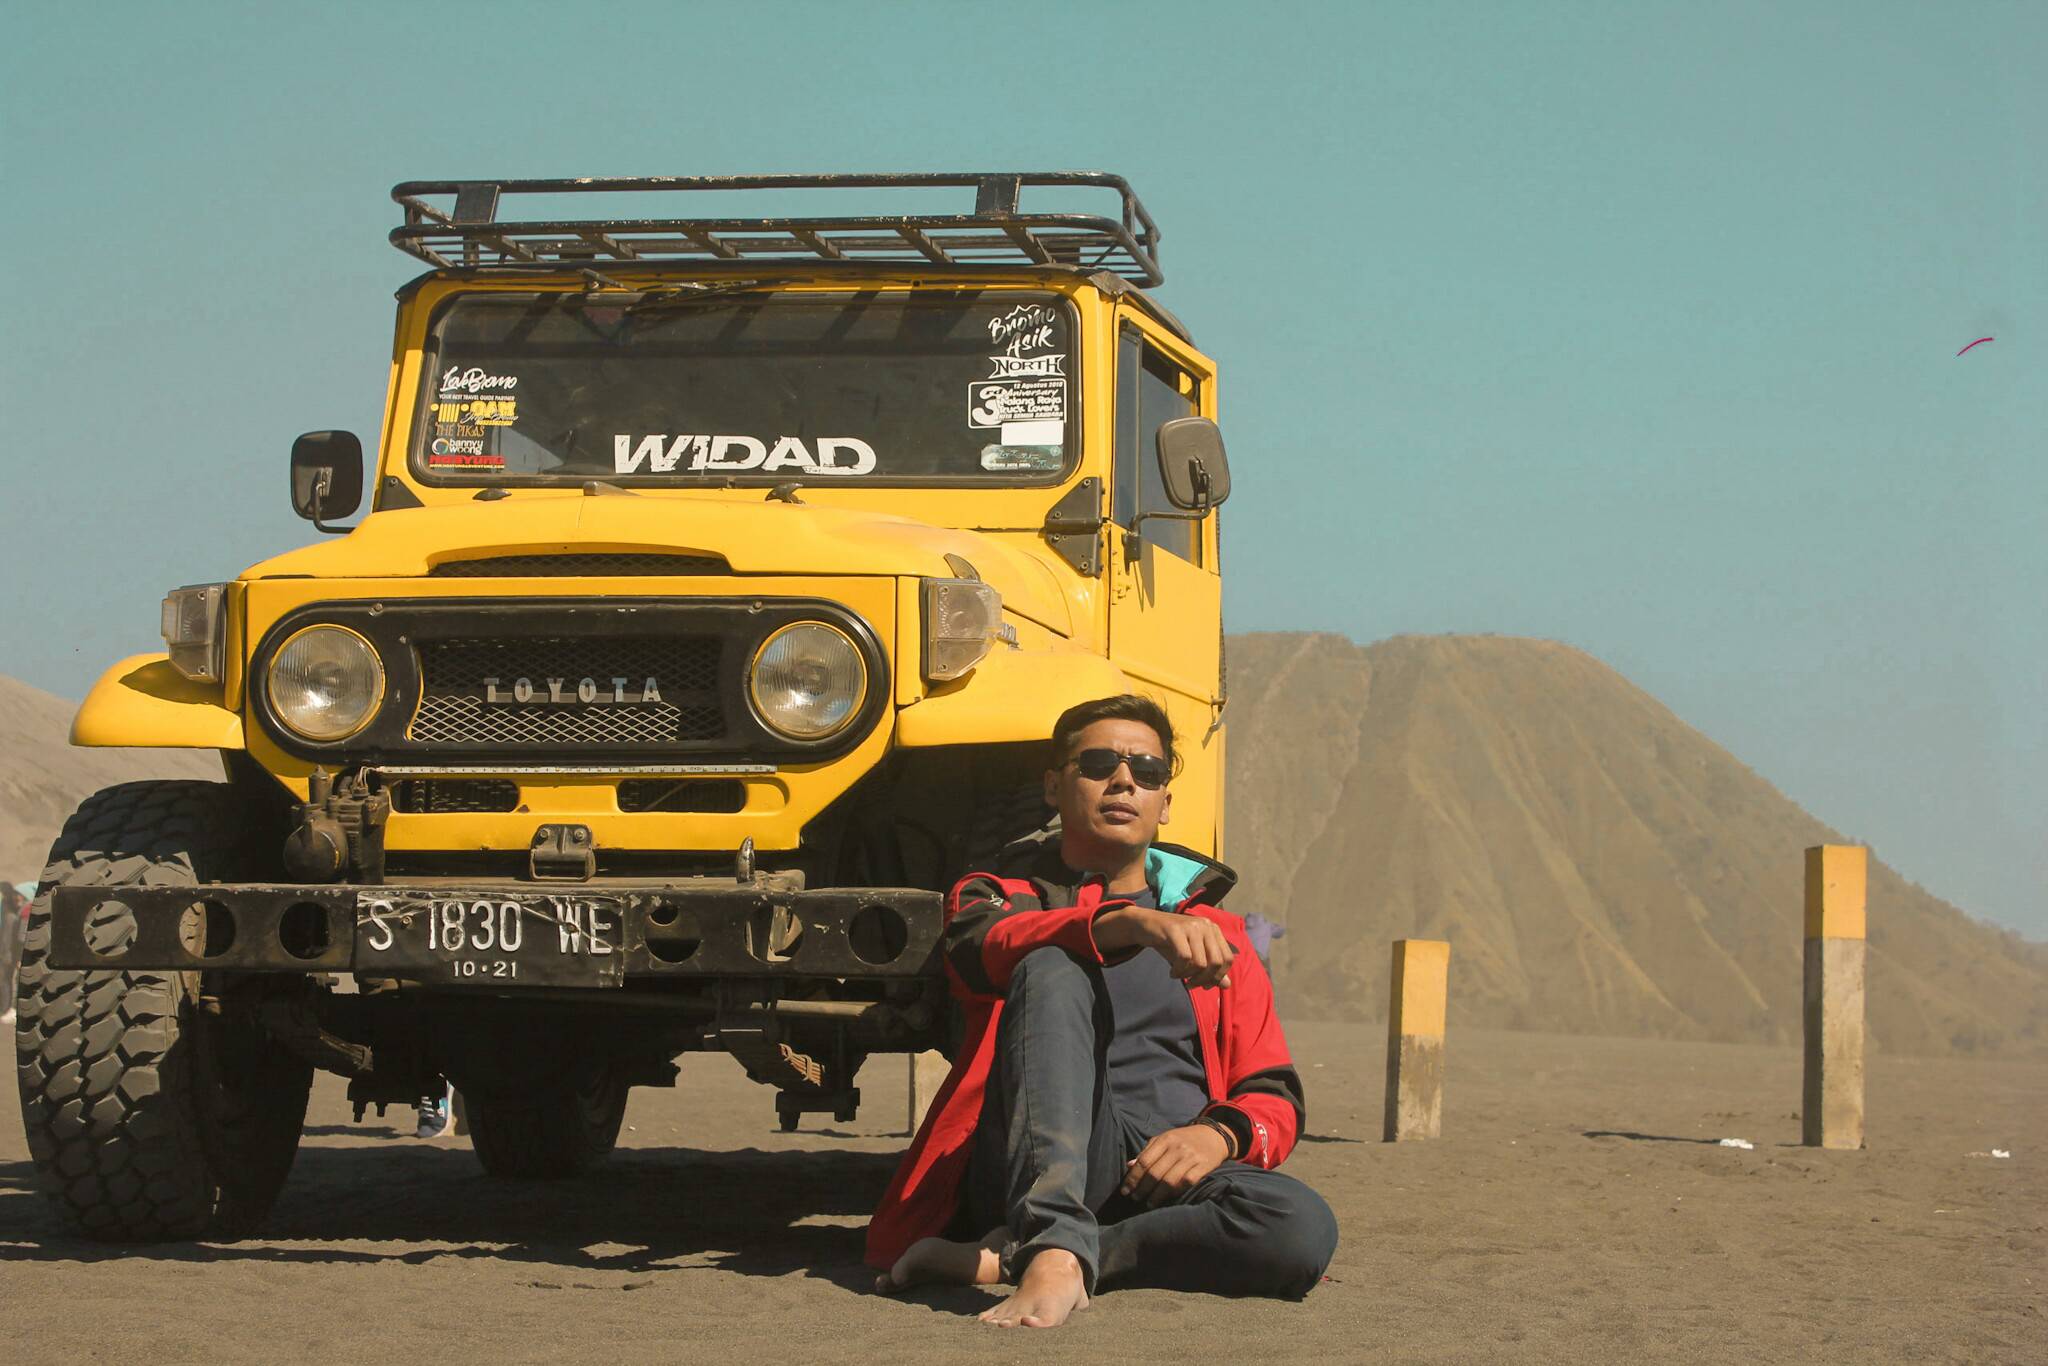 Bergaya di Depan Jeep Kuning (c) Welly Handoko/Travelingyuk